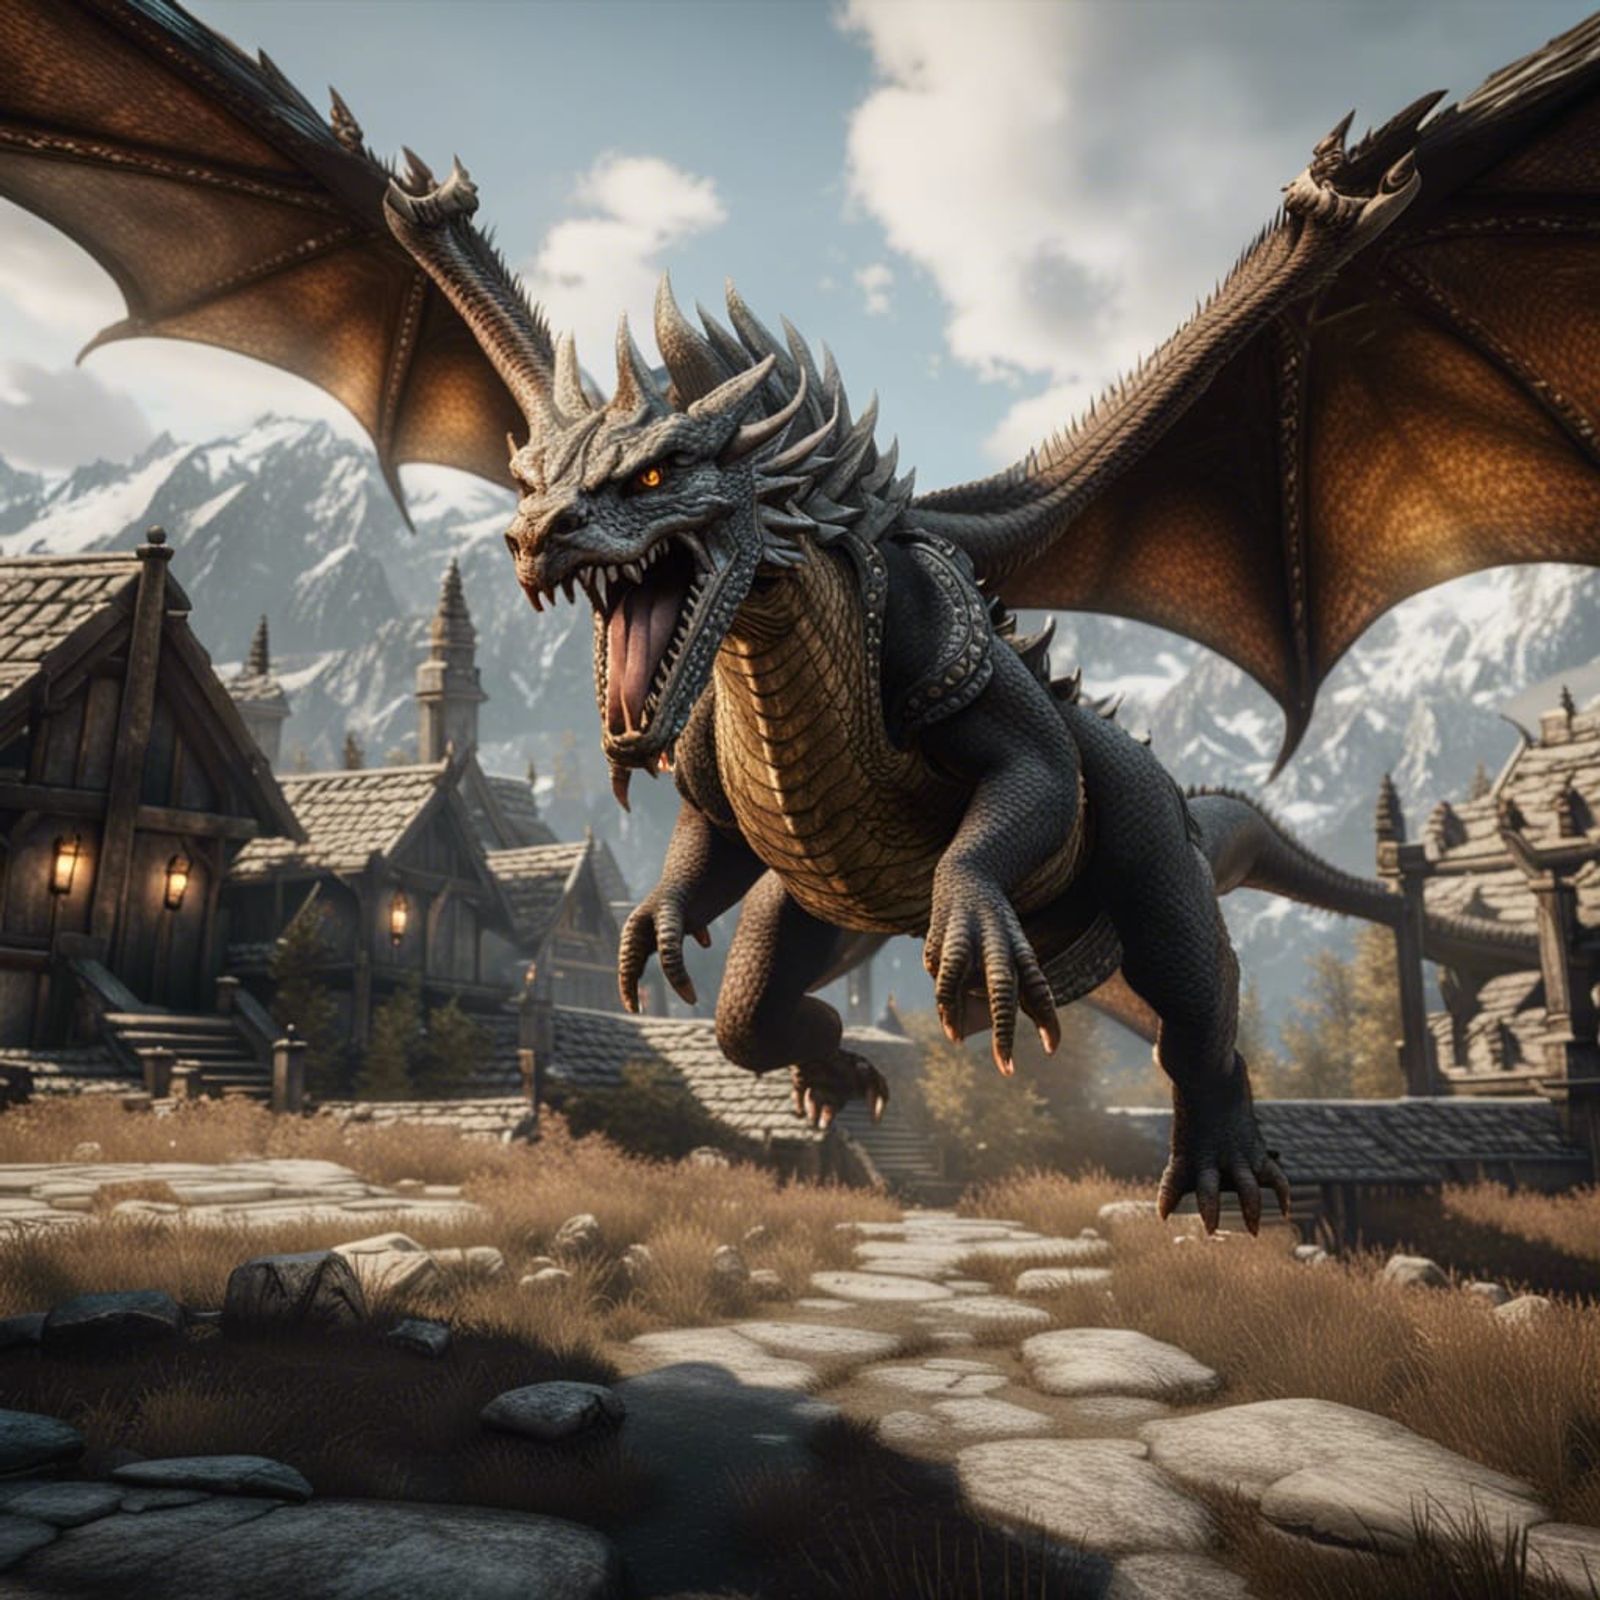 epic skyrim dragons